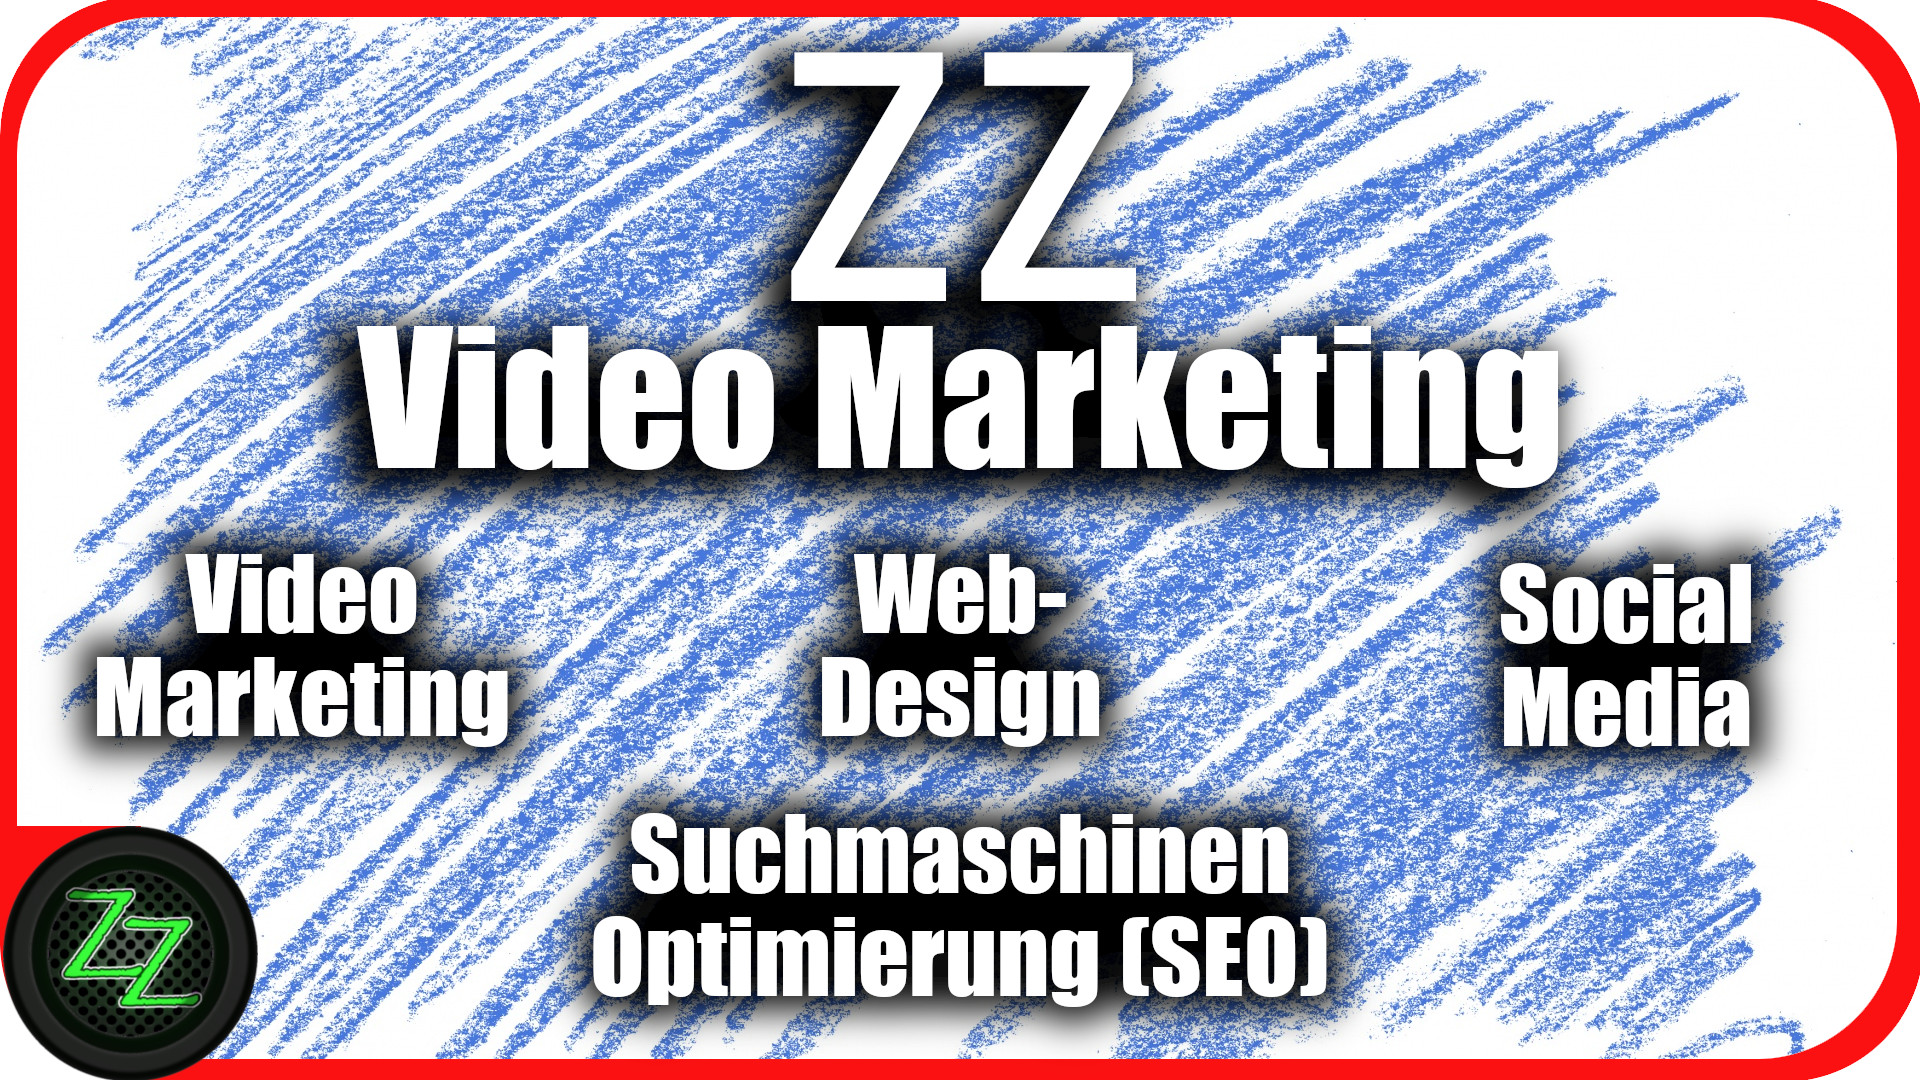 (c) Zz-video-marketing.com